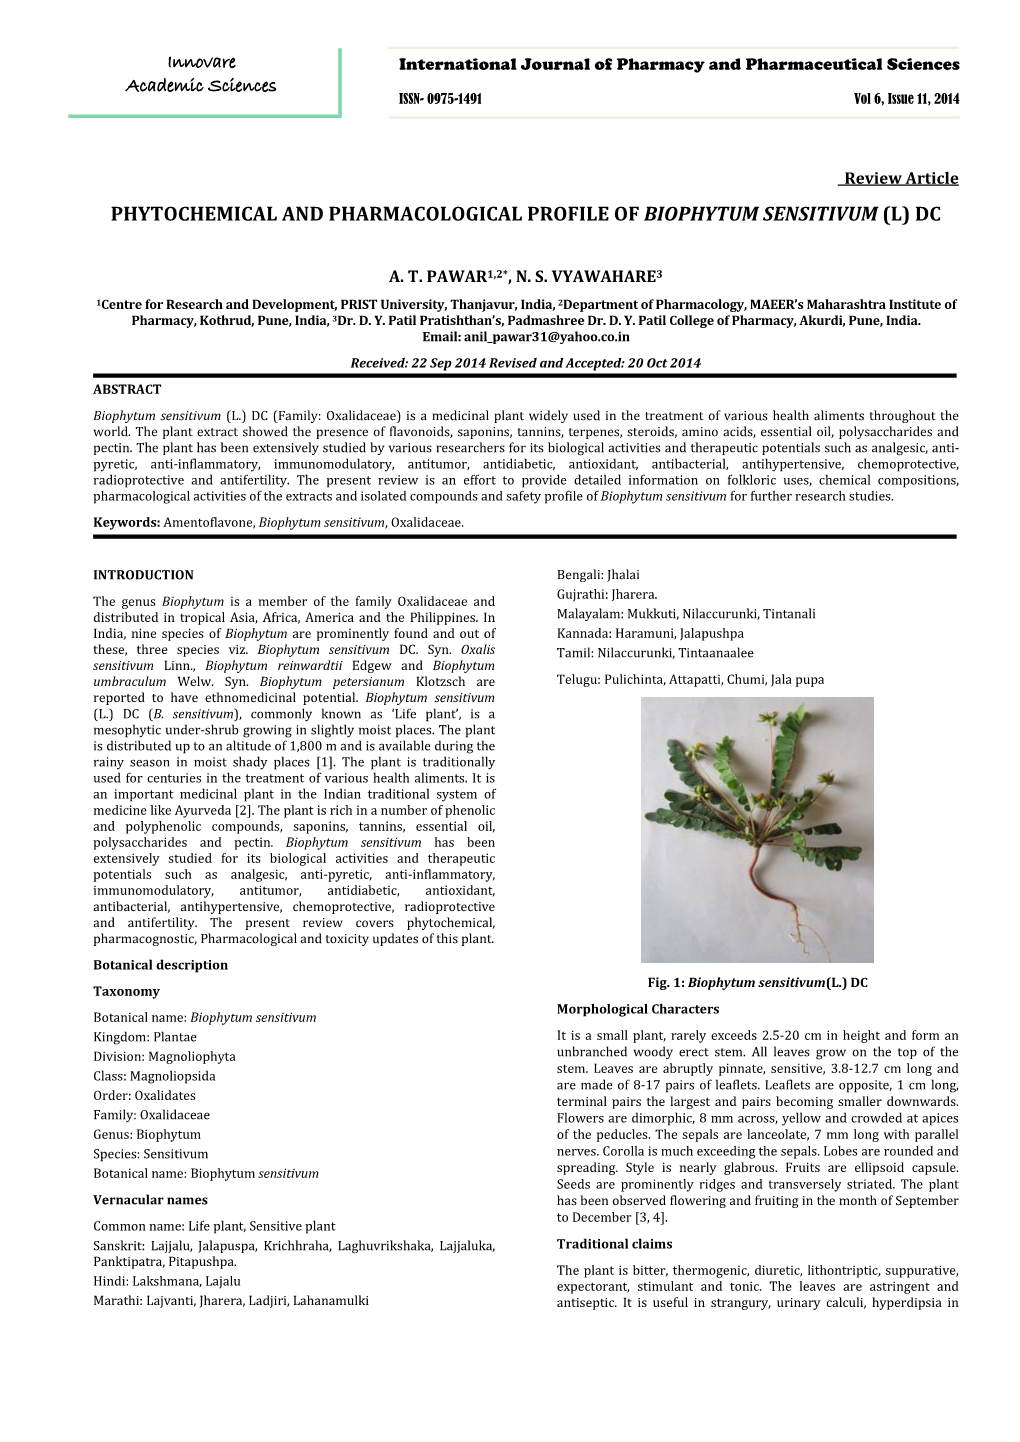 Phytochemical and Pharmacological Profile of Biophytum Sensitivum (L) Dc